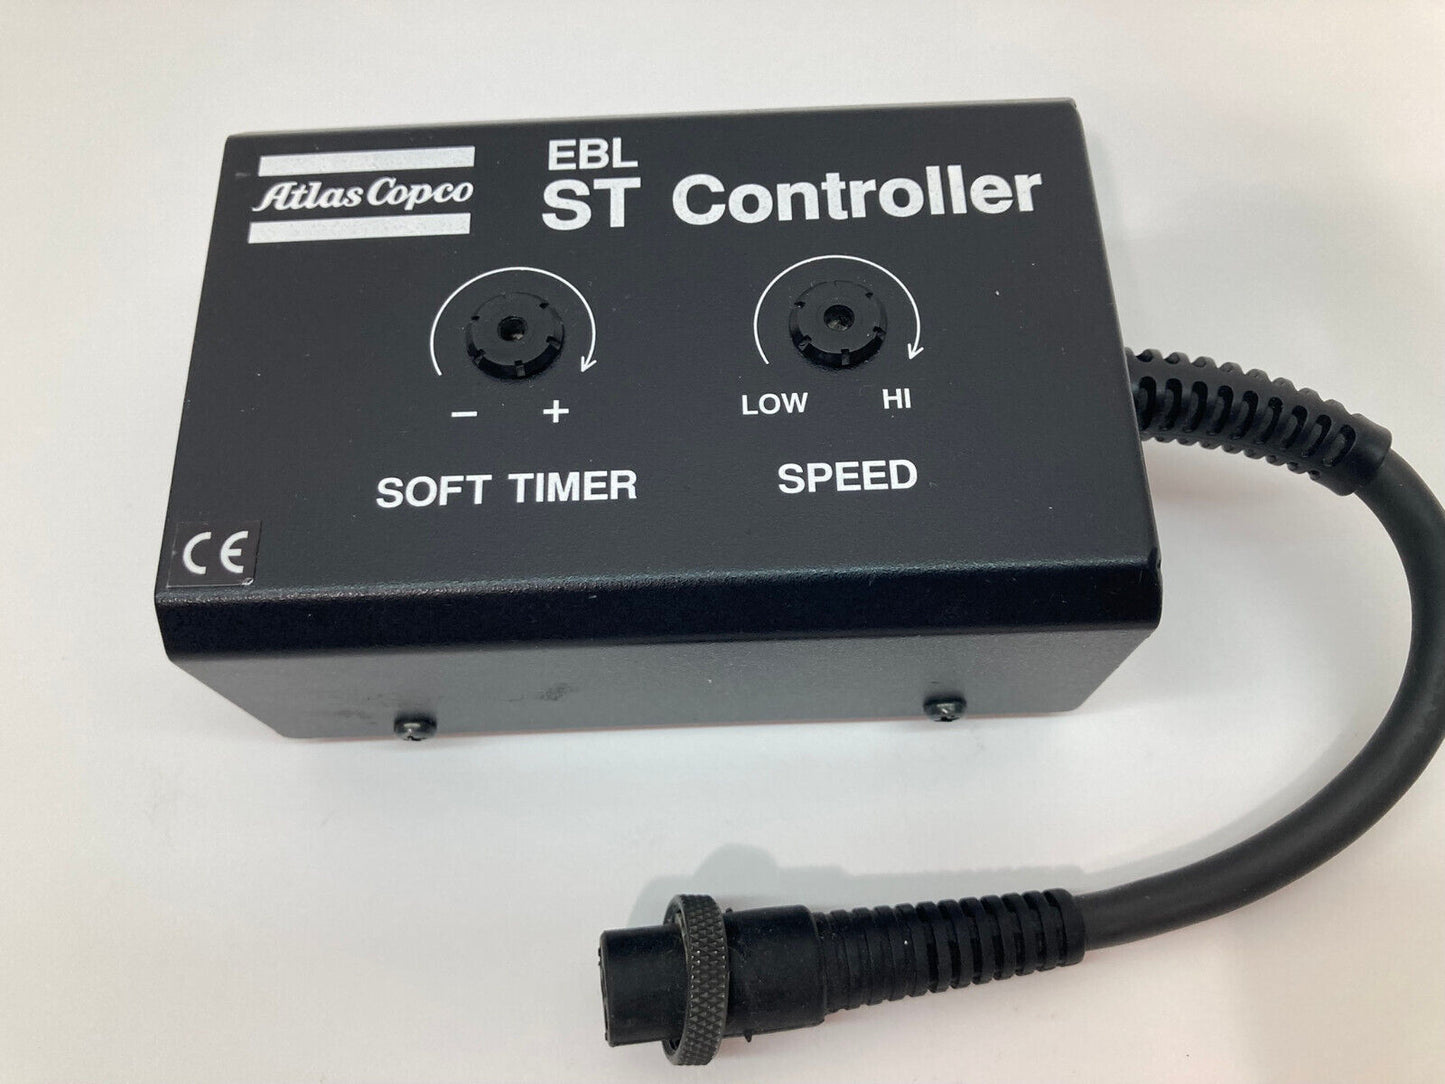 Atlas Copco EBL ST Controller